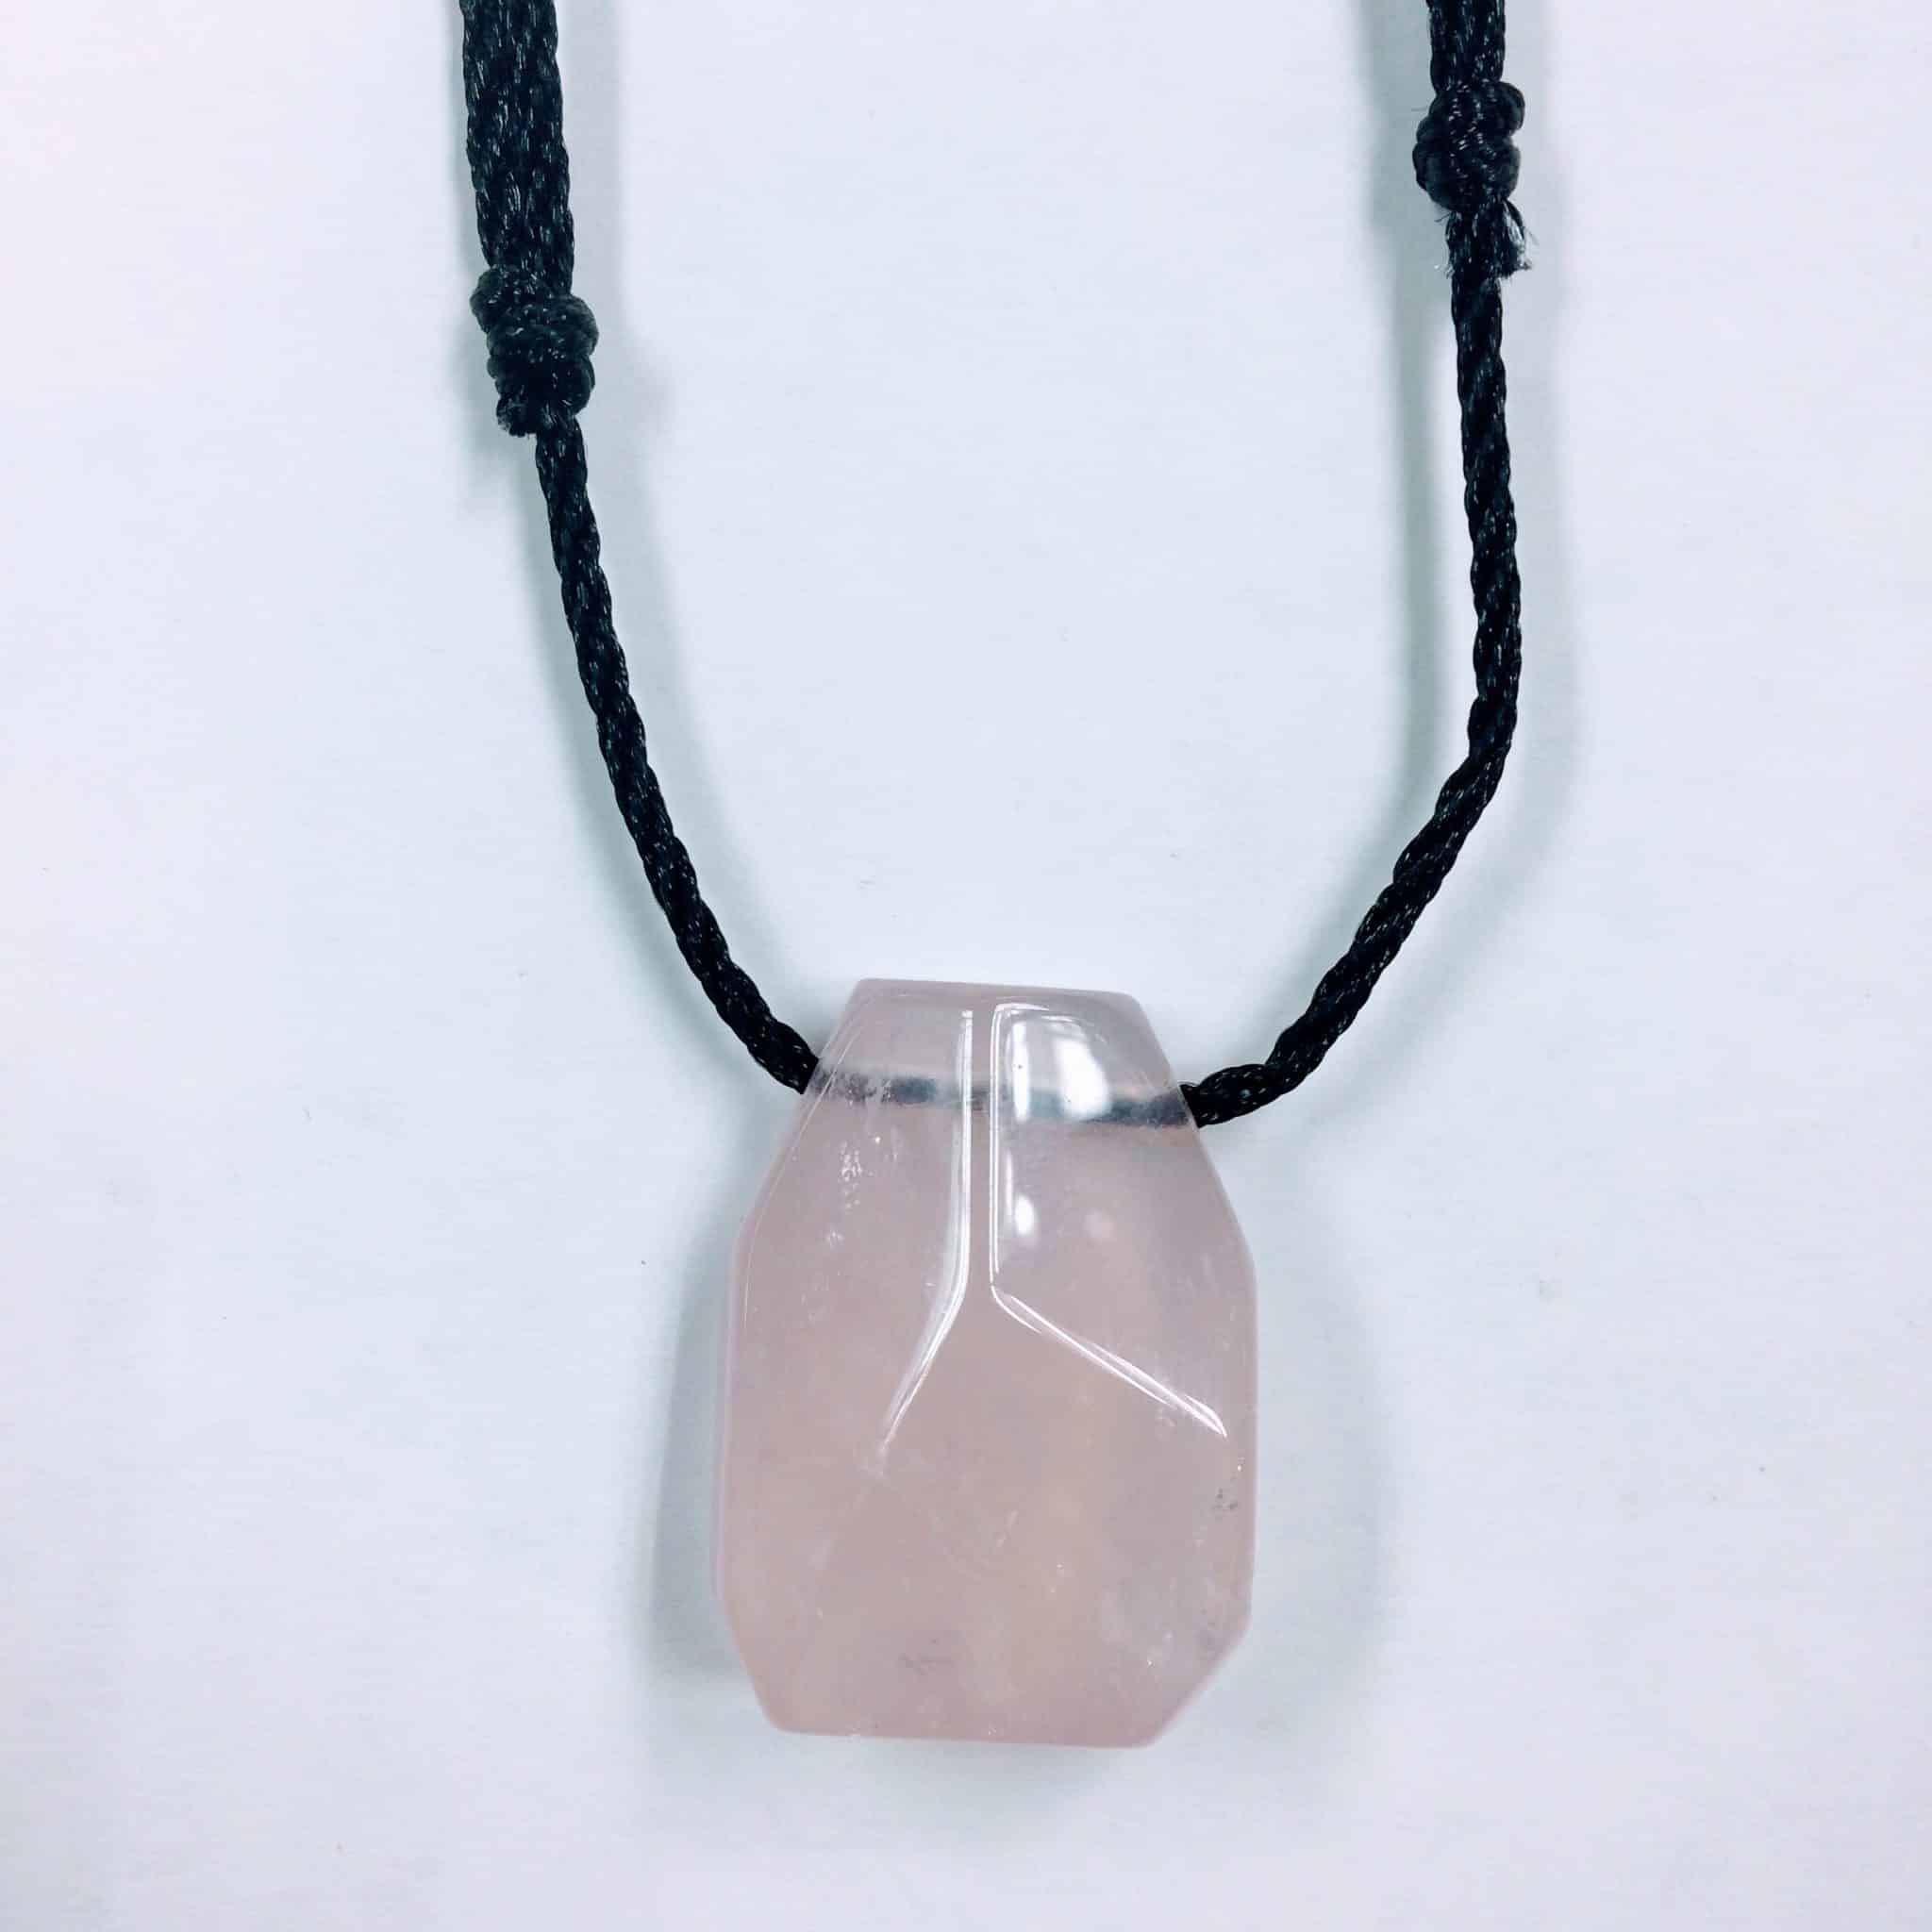 NEW! ROSE Quartz crystal necklace on black cord